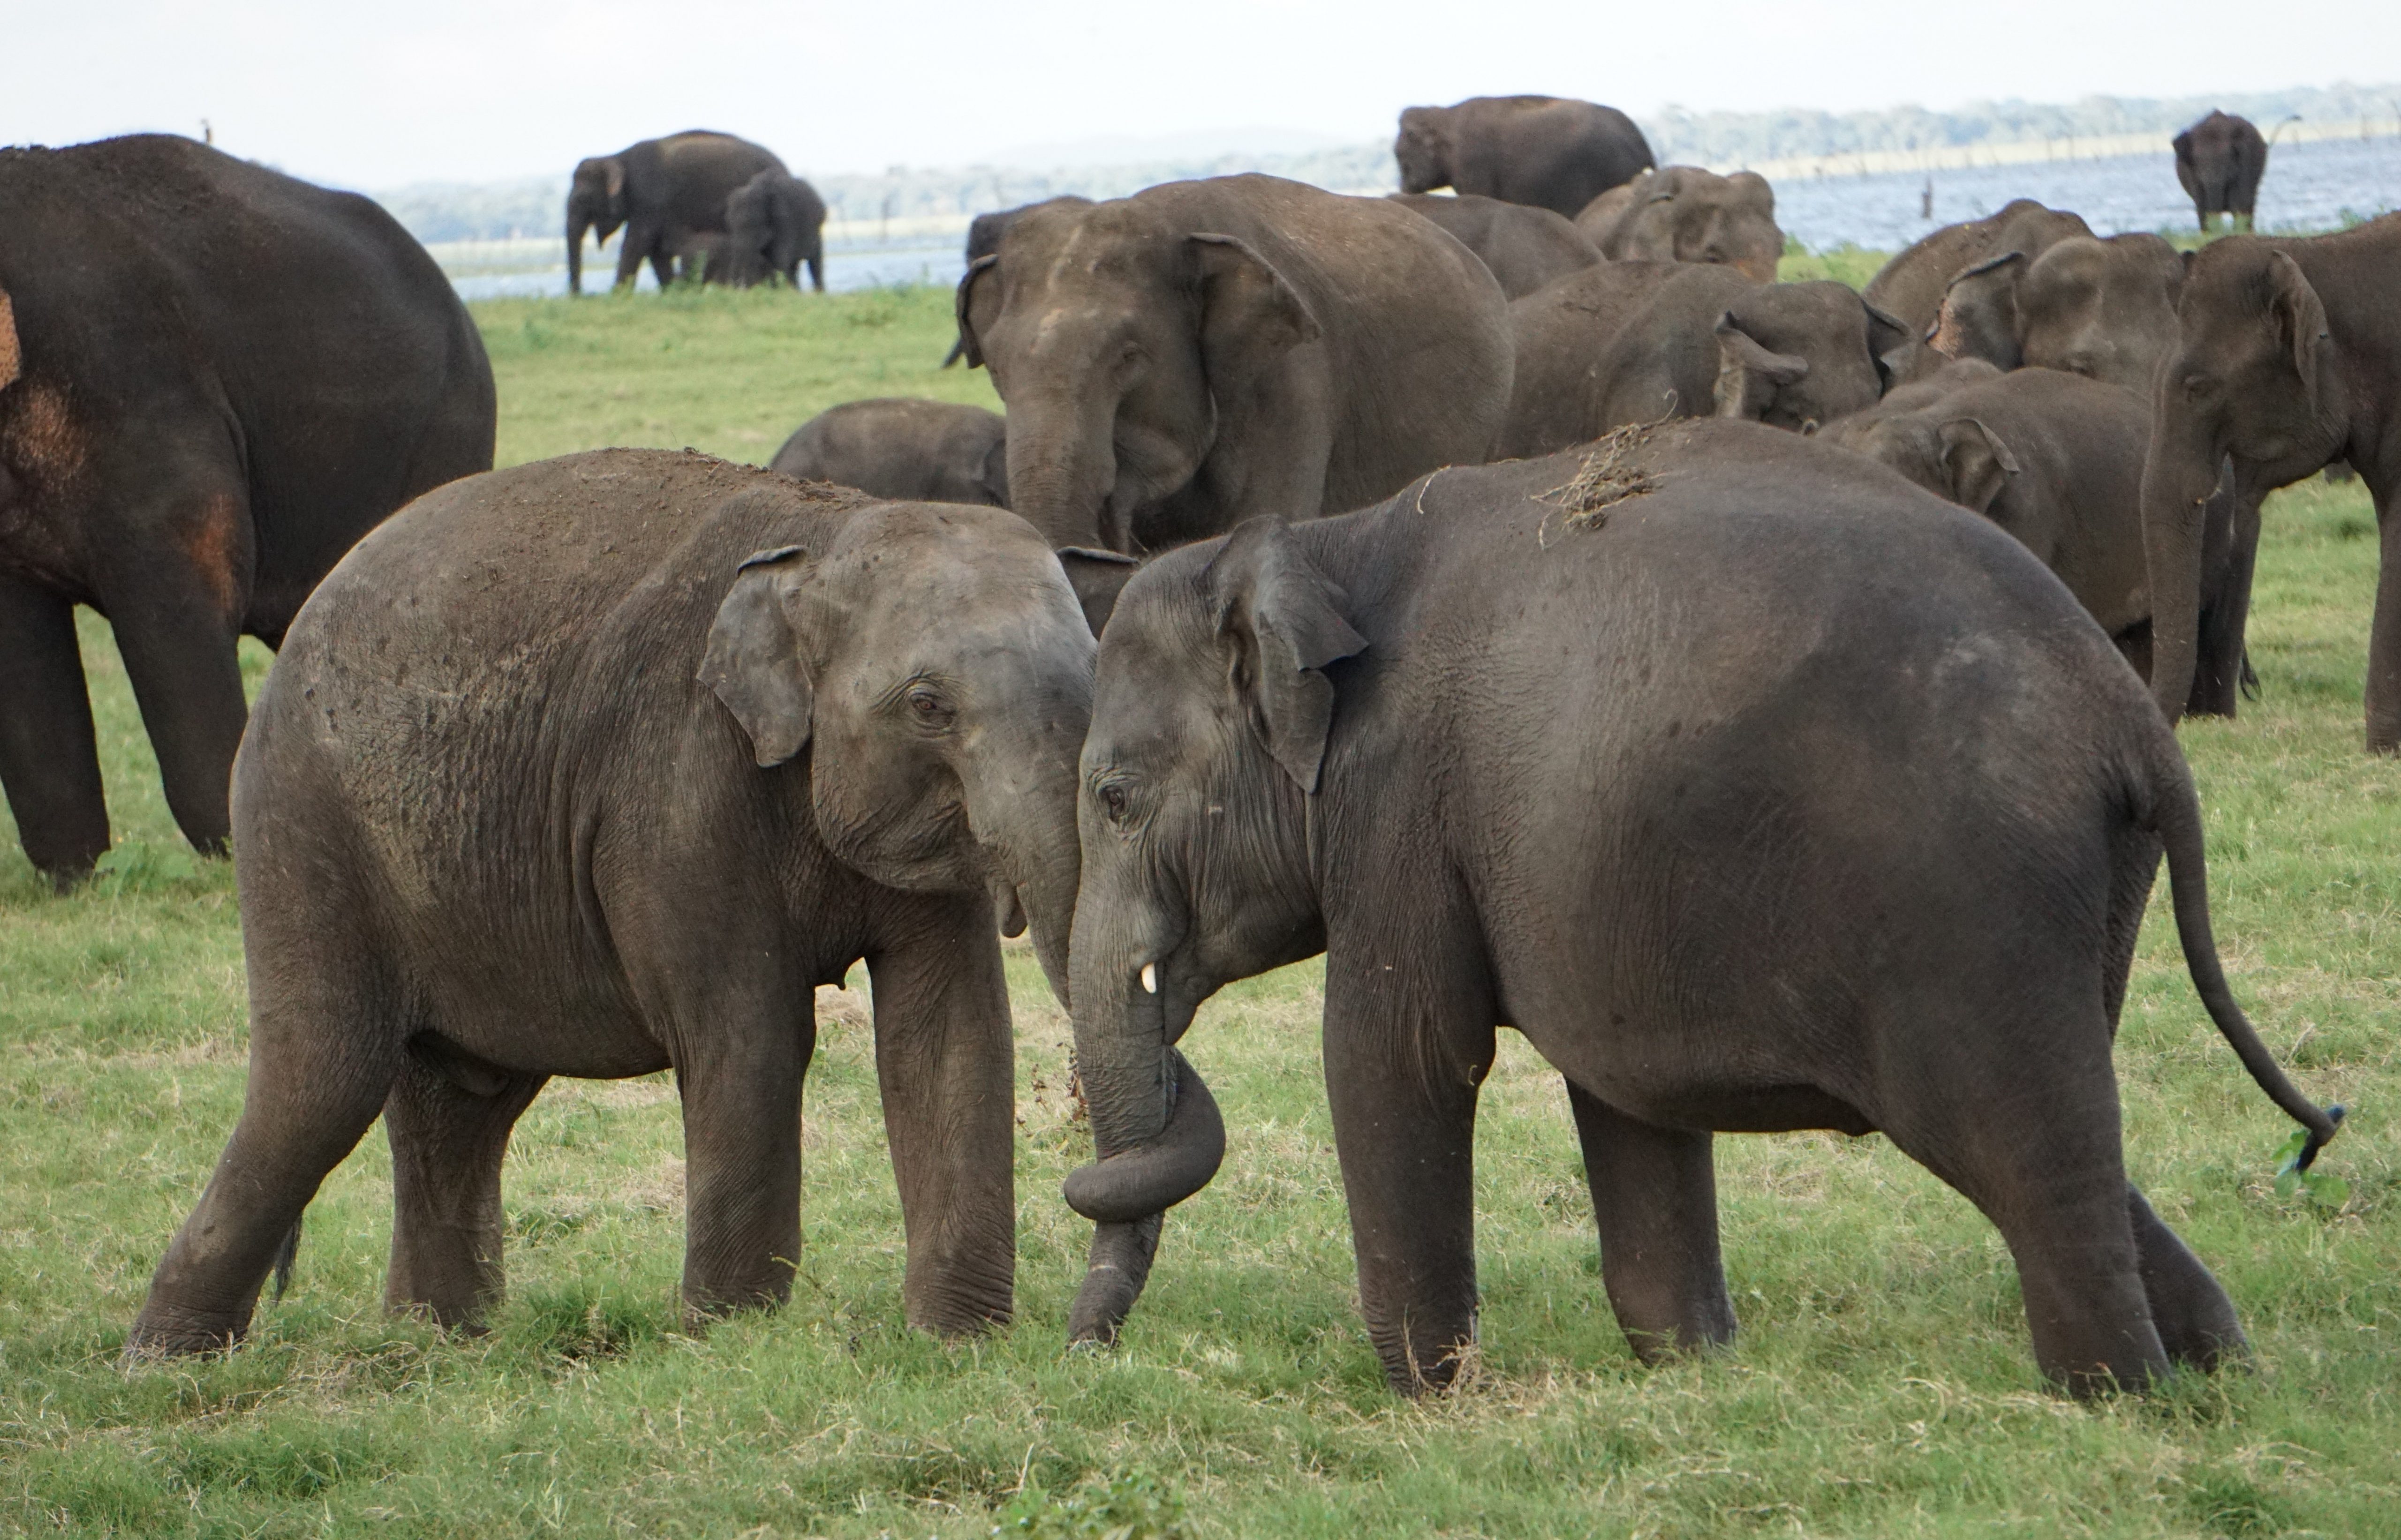 Young elephants wrestling